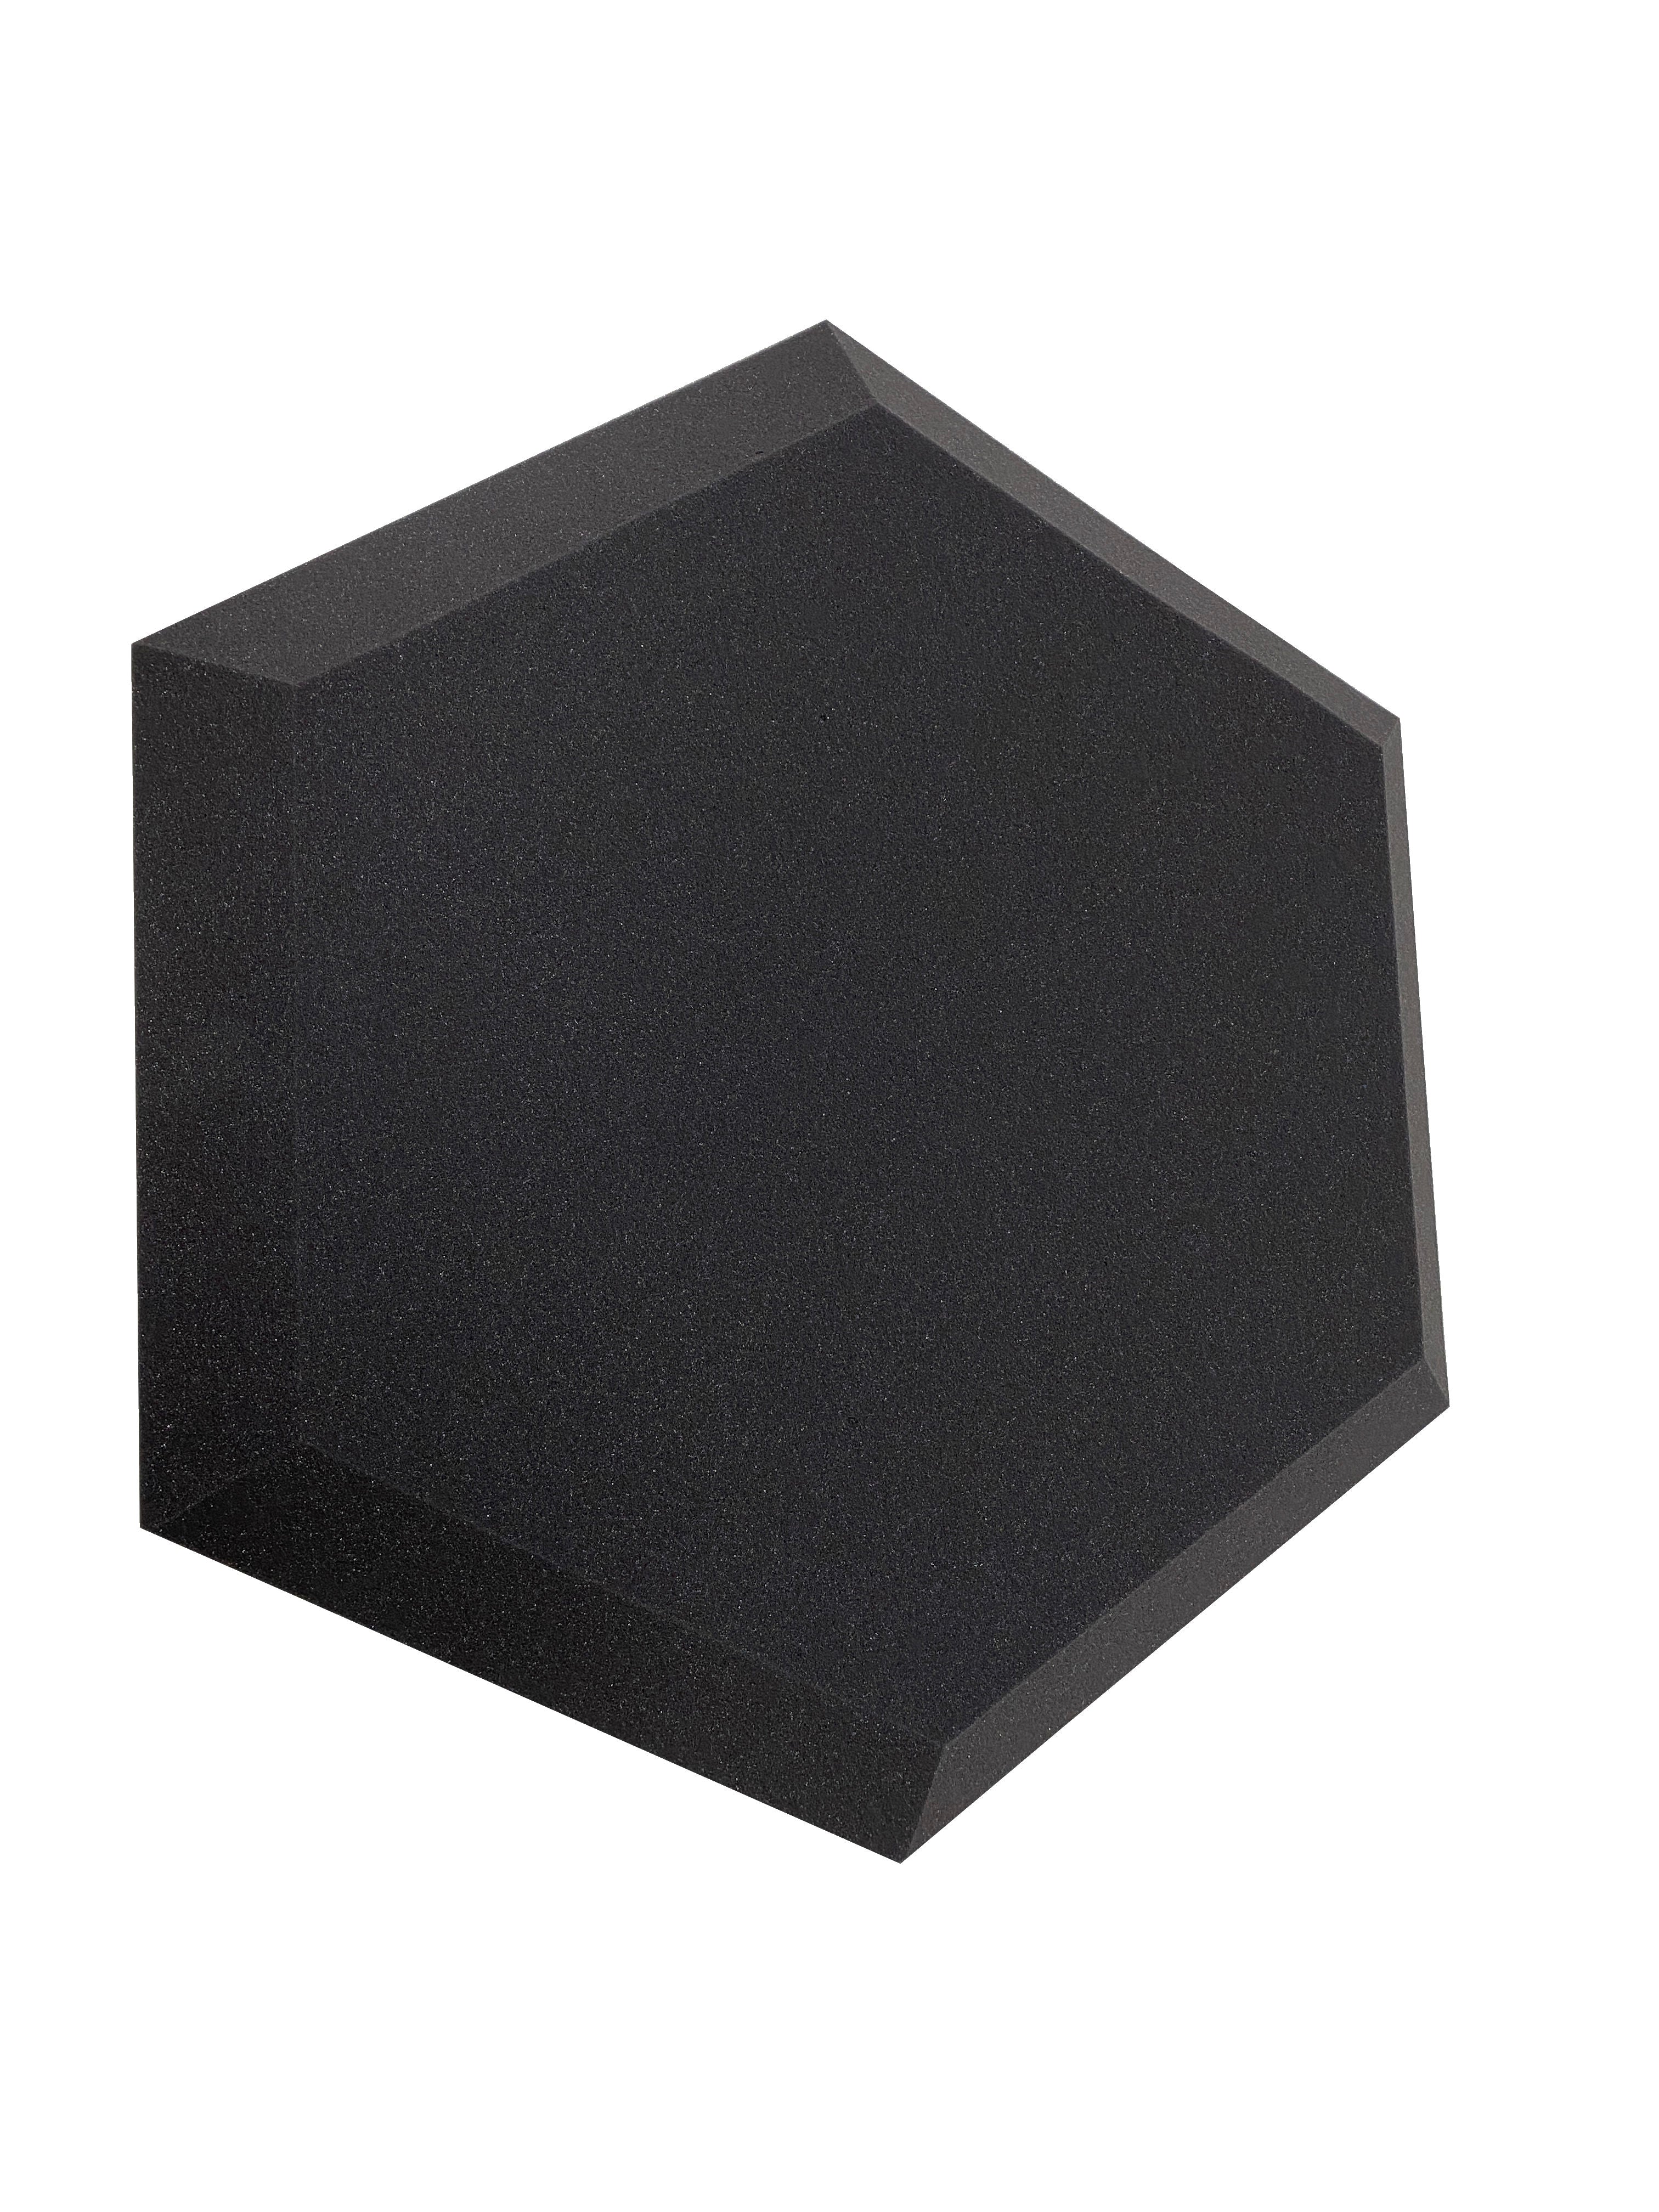 Buy dark-grey Hexatile3 Acoustic Studio Foam Tile Pack